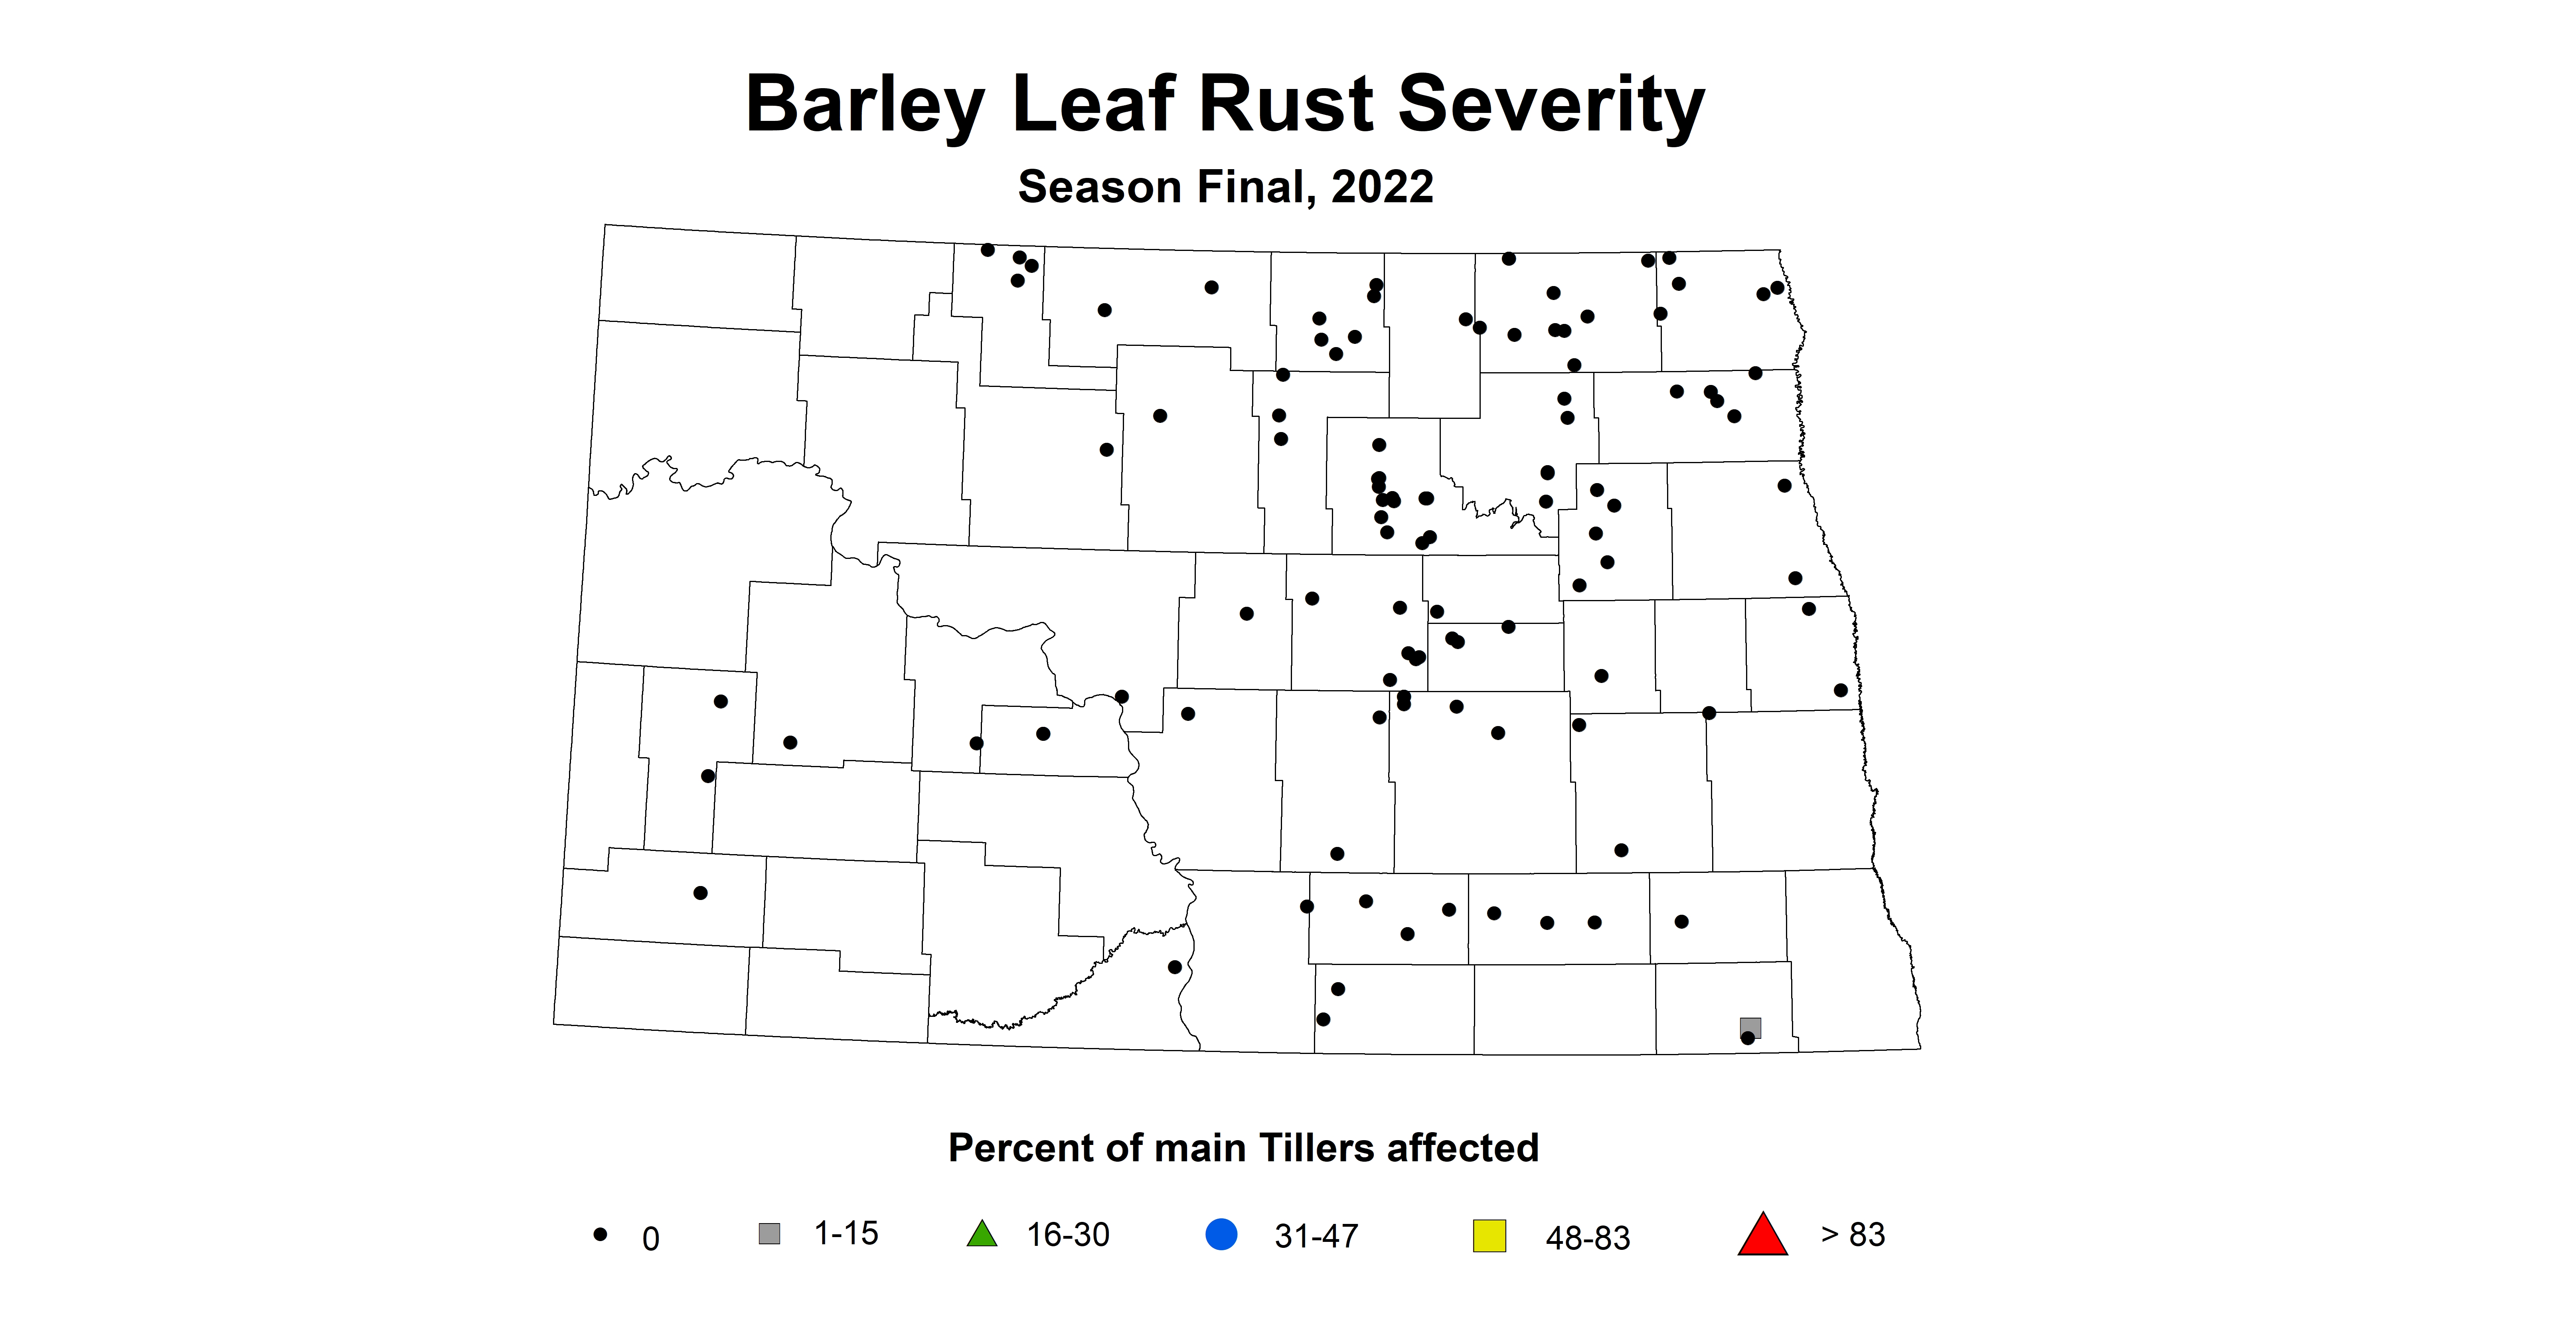 barley leaf rust severity 2022 season final